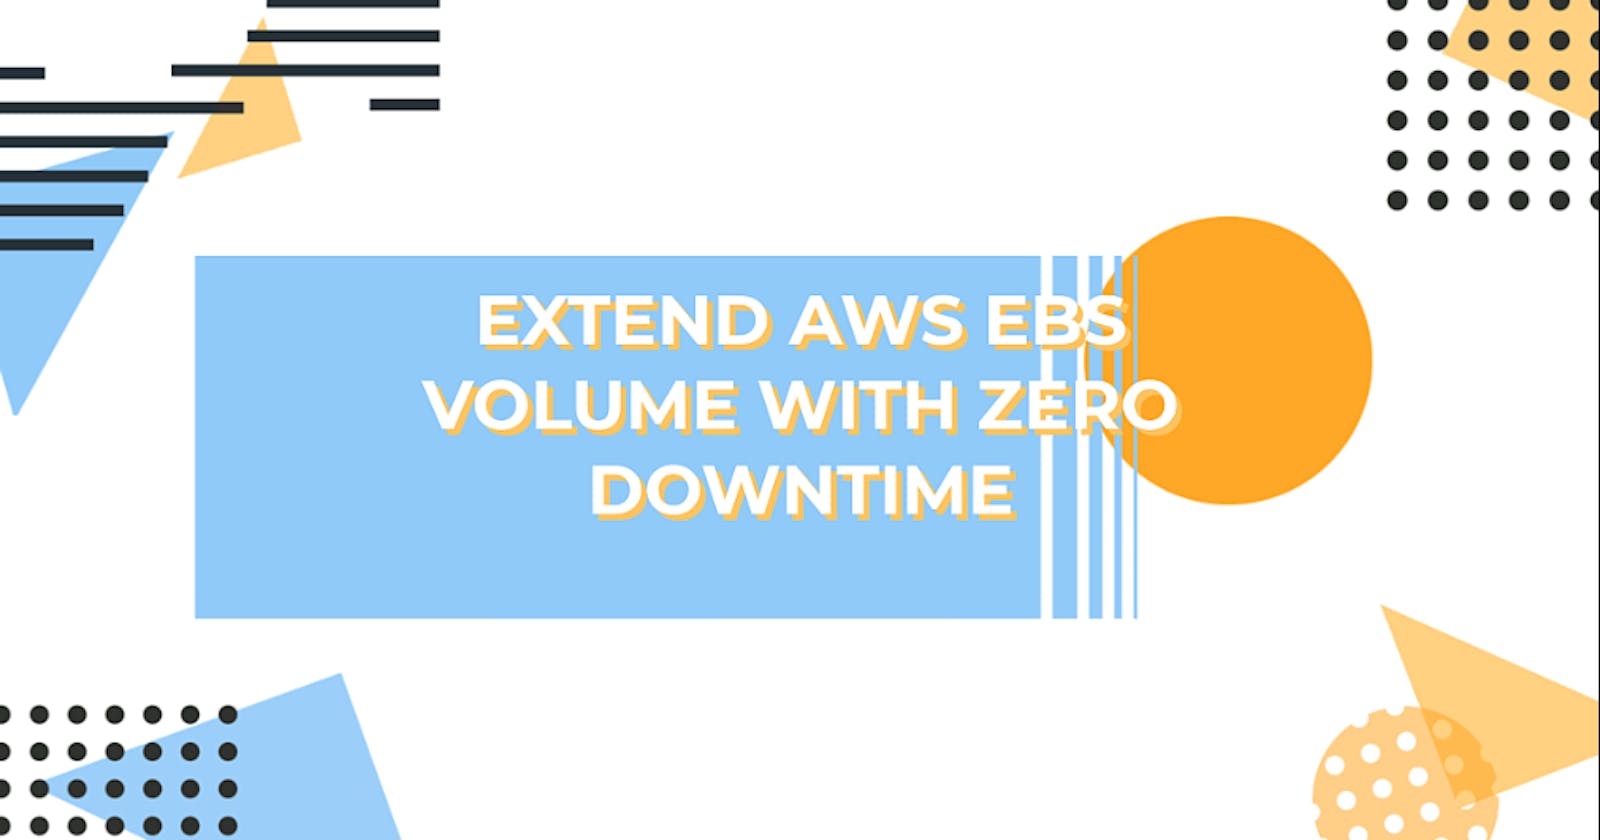 Extend AWS EBS Volume with Zero Downtime